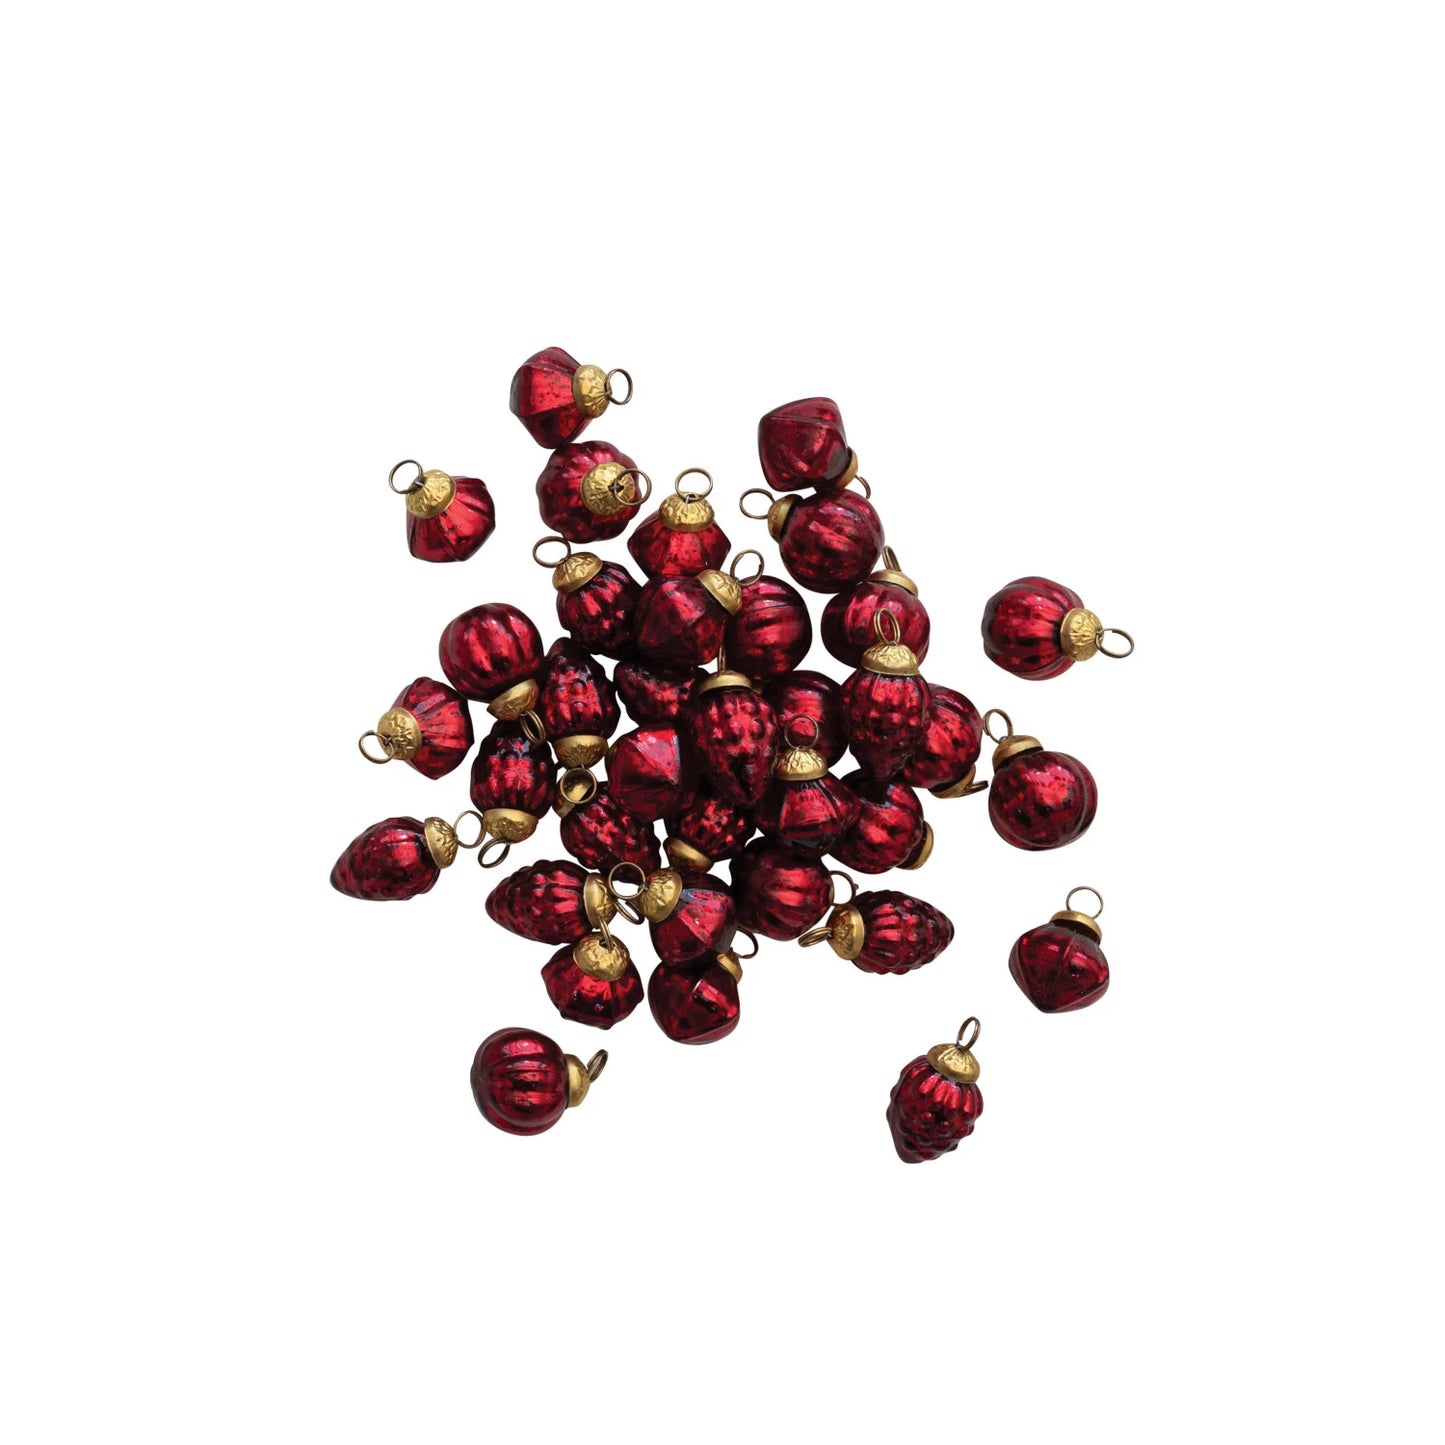 Mercury Glass Ornaments in Muslin Bag | Red